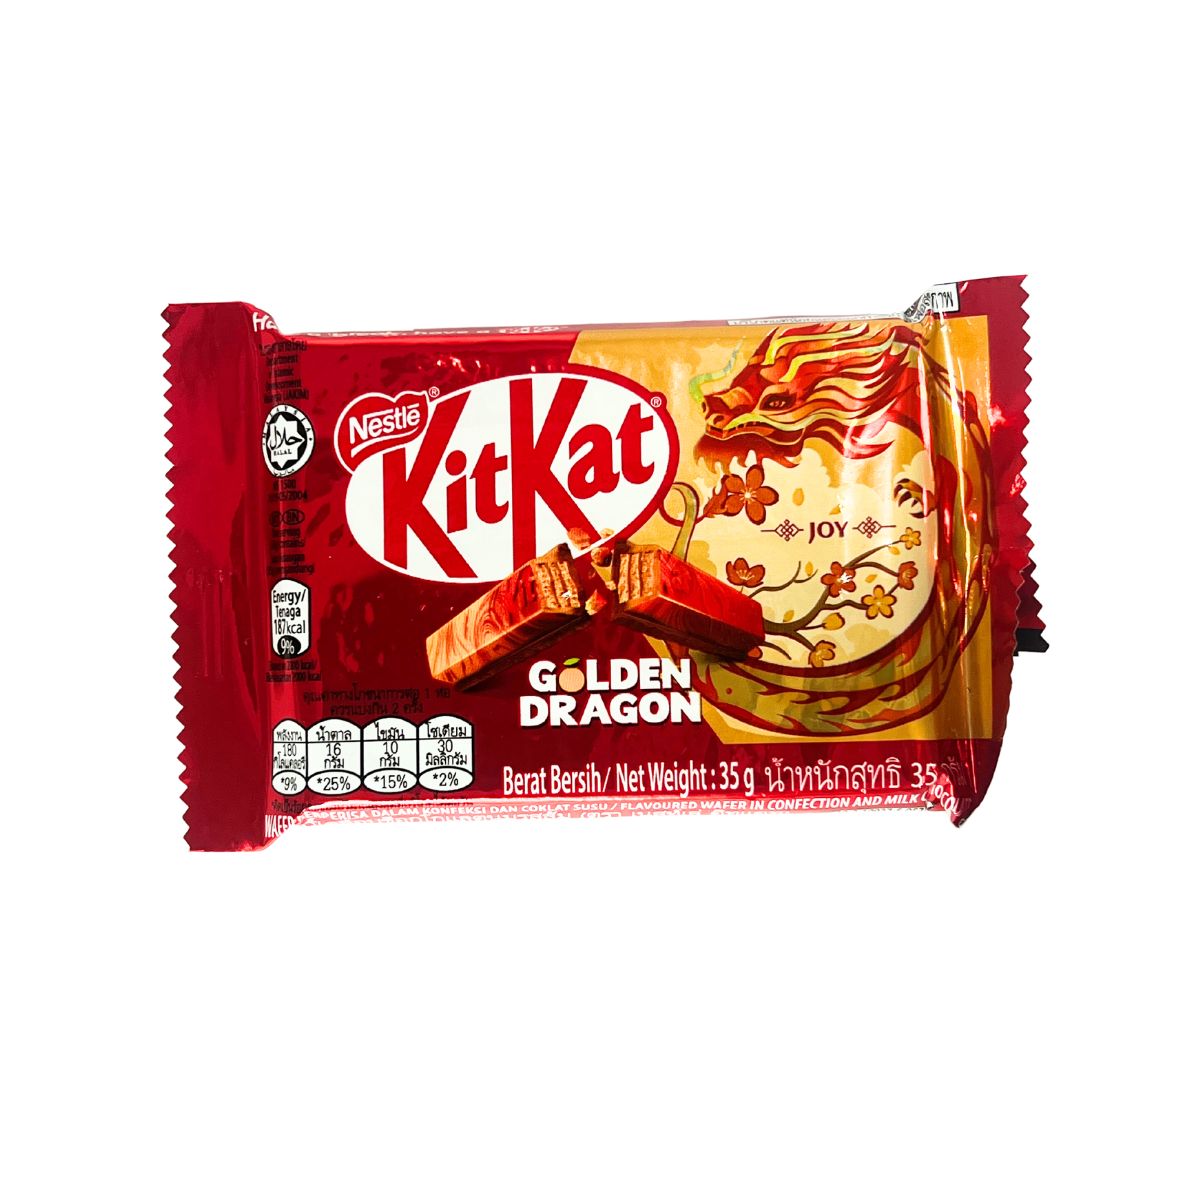 KitKat - Golden Dragon (Thailand)